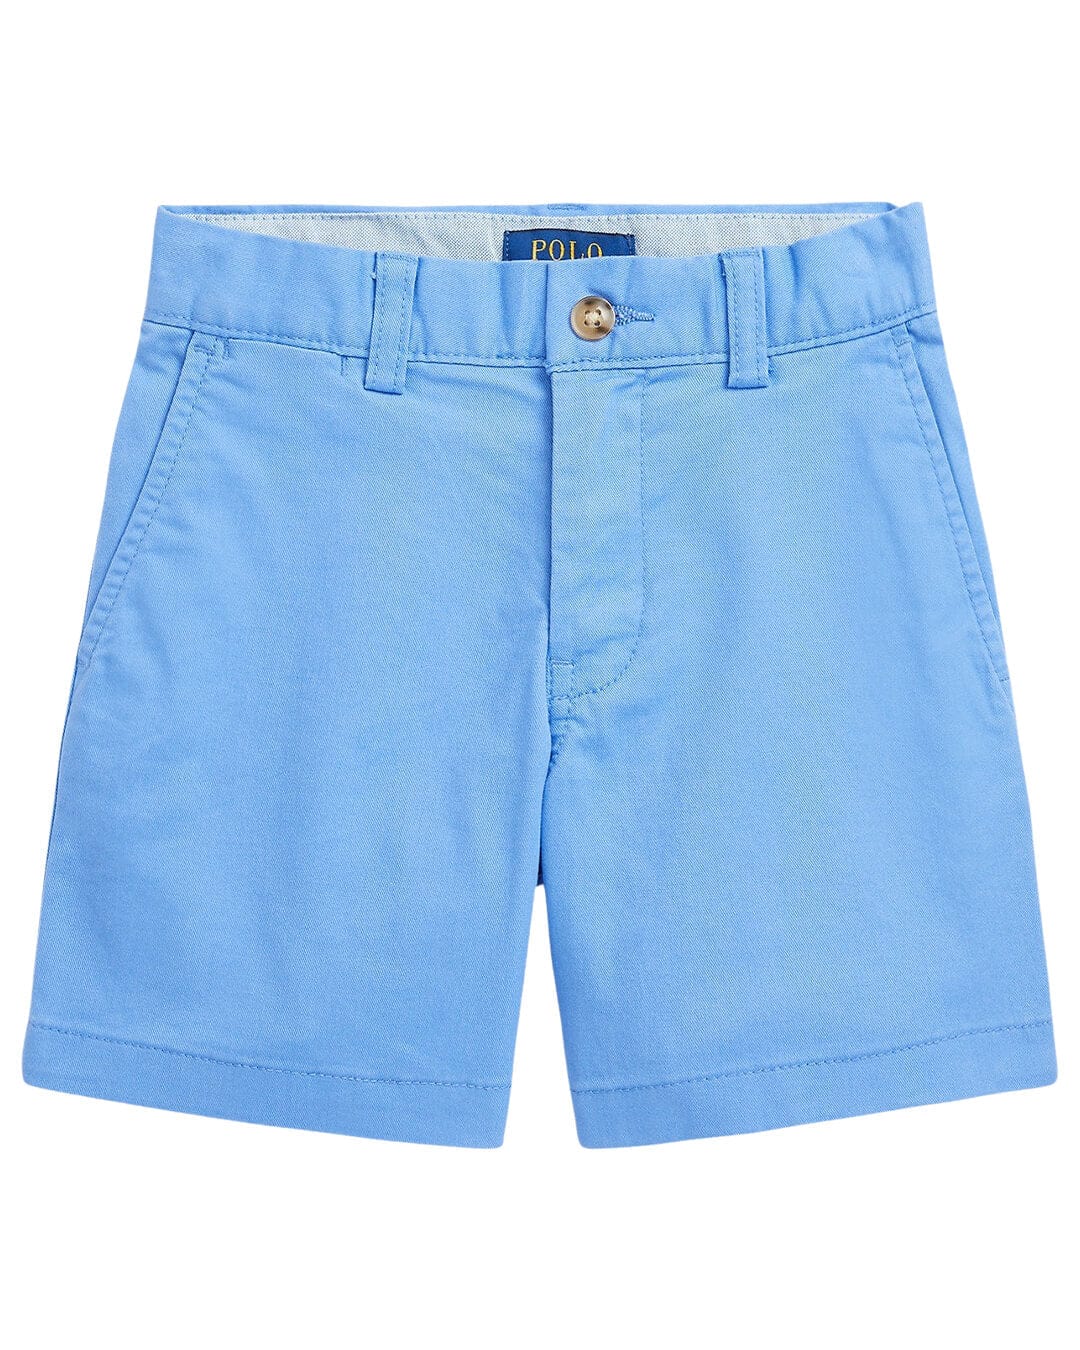 Polo Ralph Lauren Shorts Boys Polo Ralph Lauren Bedford Blue Flat Front Shorts